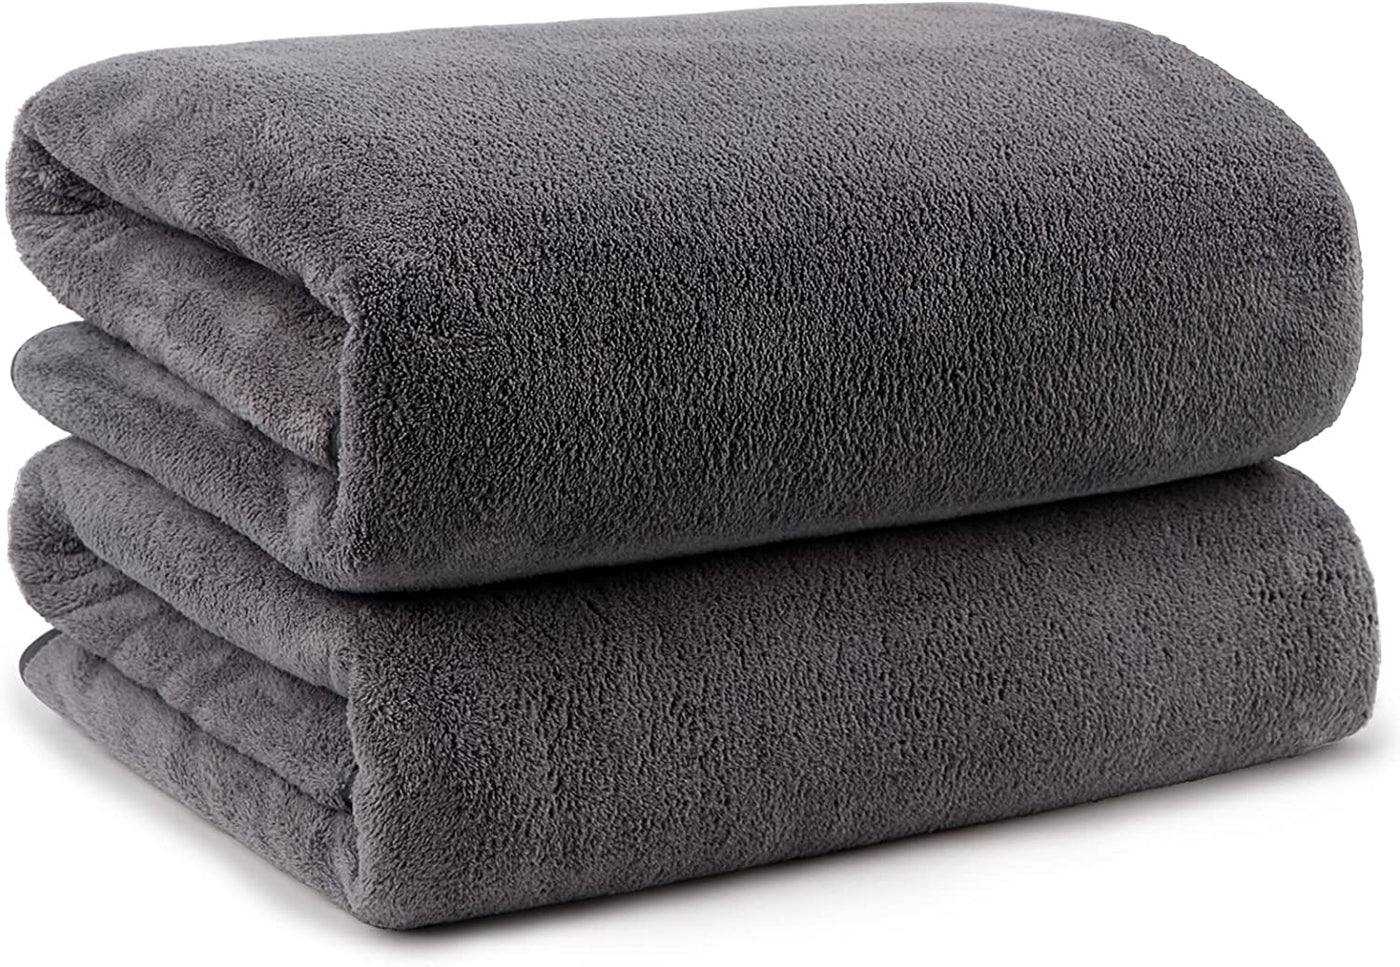 Microfiber Bath Towel Set Pack of 2(27’’ X 54’’)